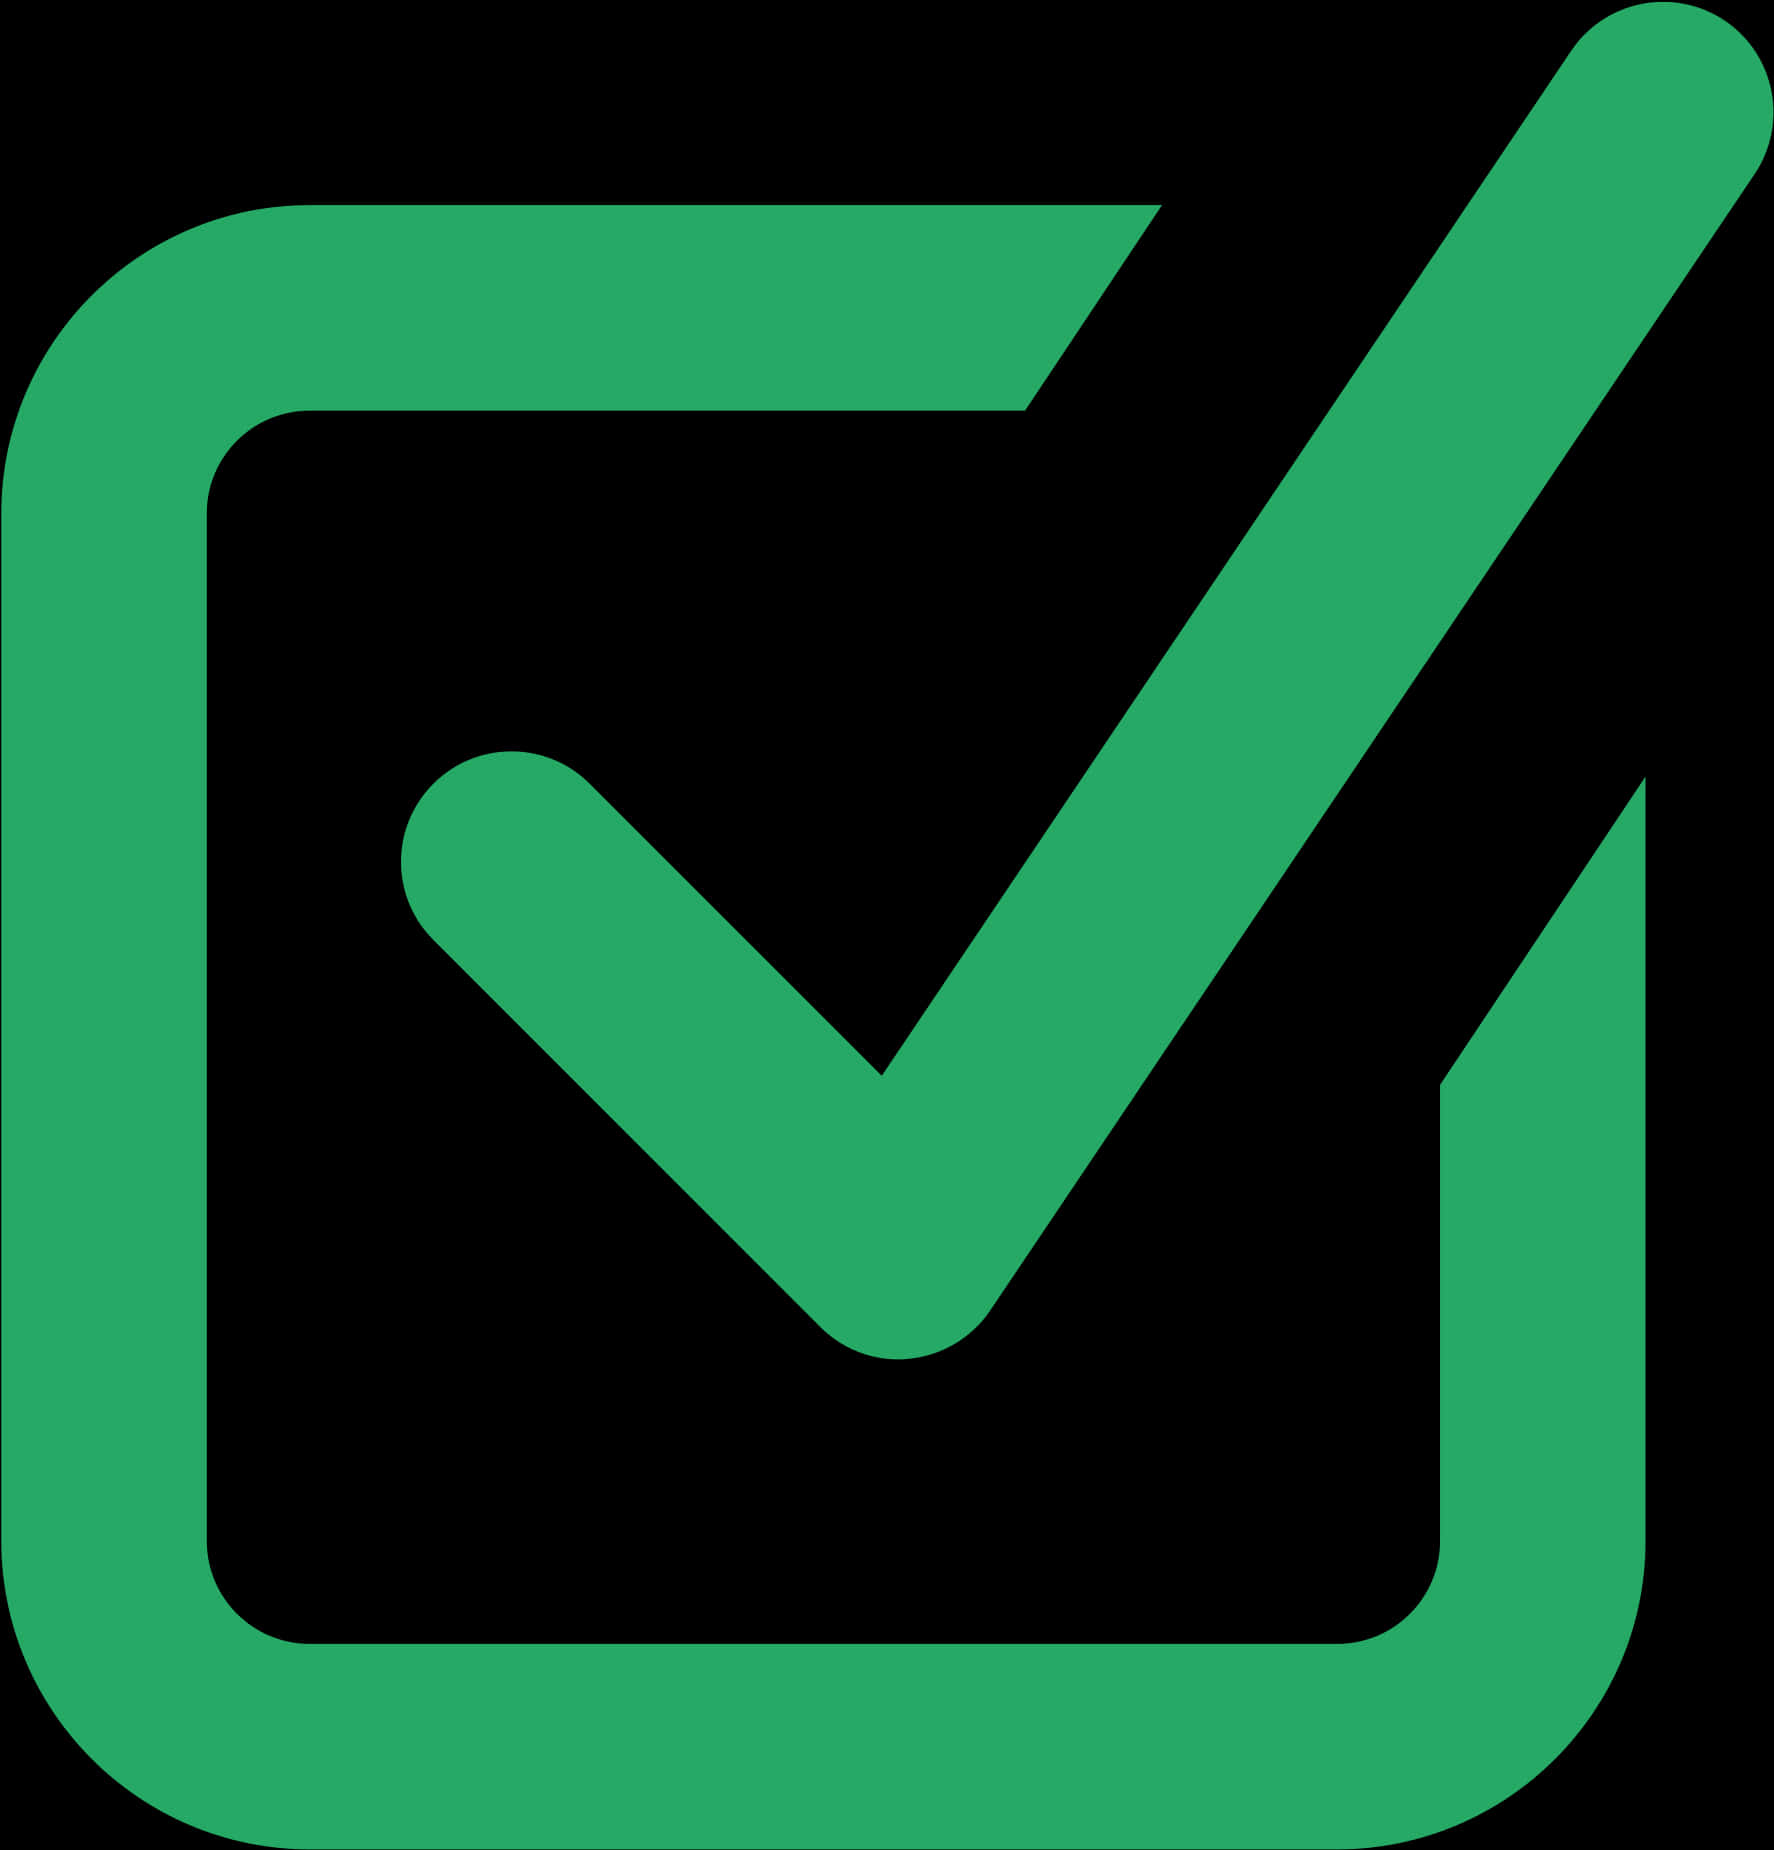 Green Check Mark Icon PNG image